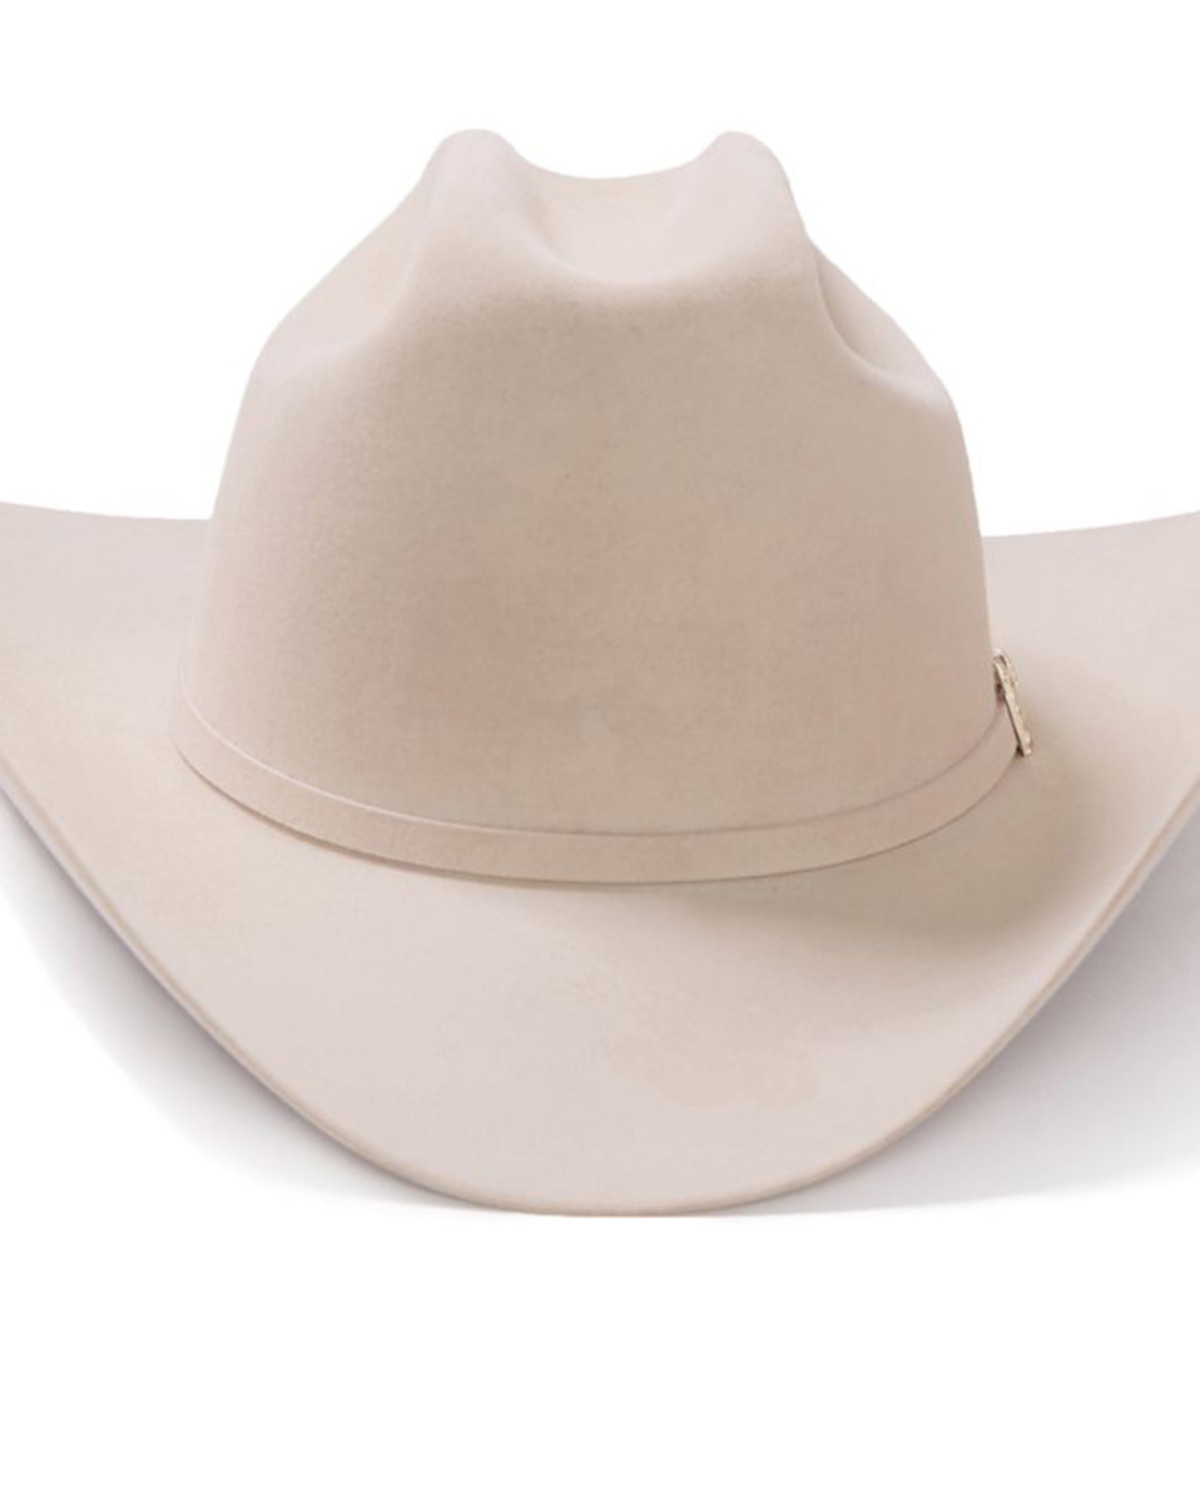 Felt Cowboy Hats